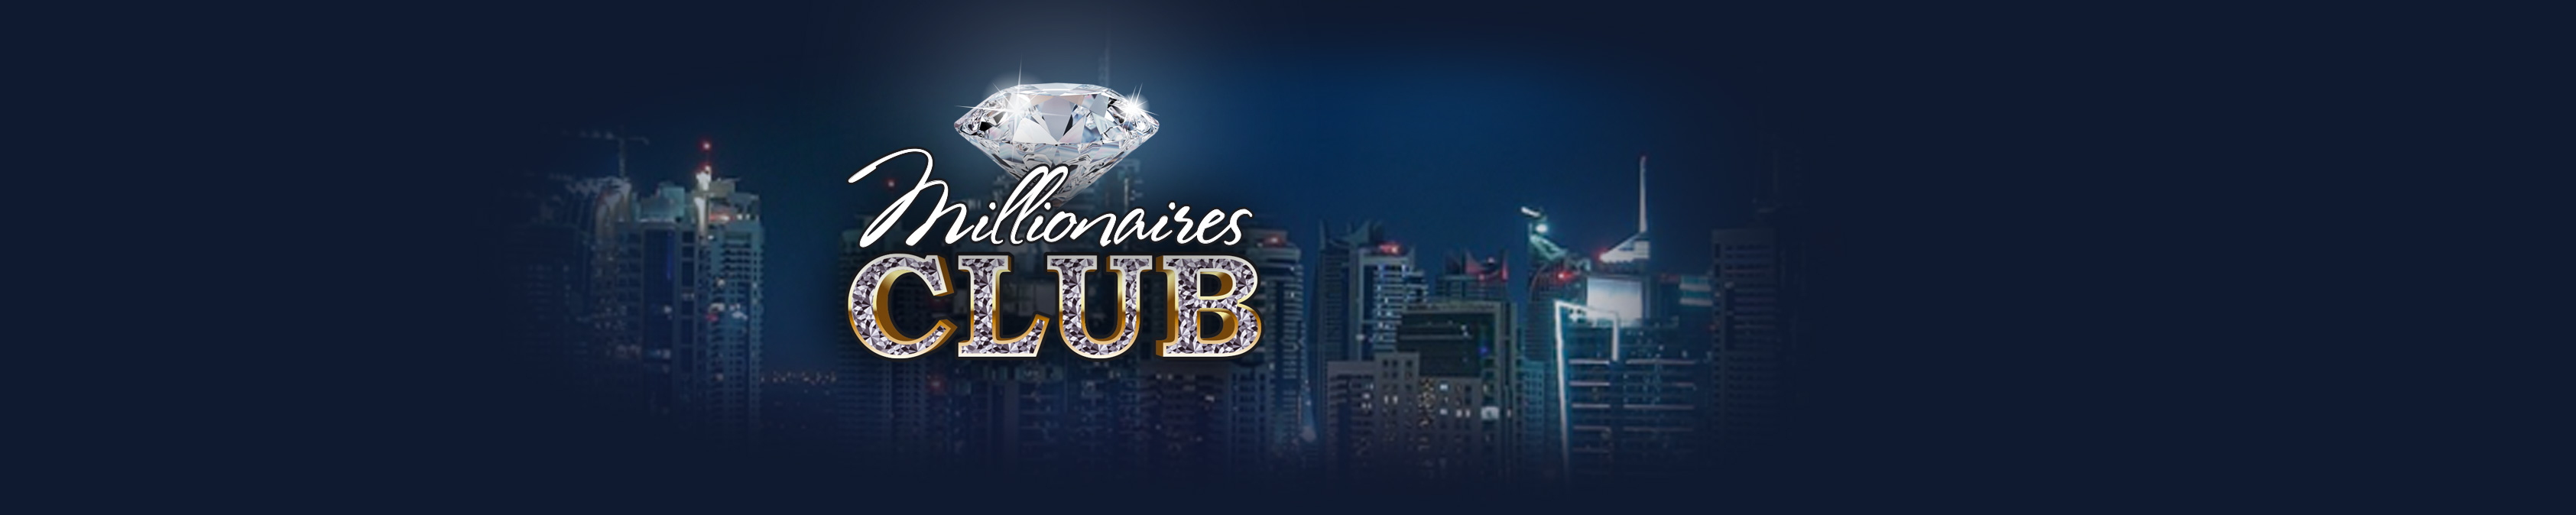 ežreb Millionaires Club EASIT